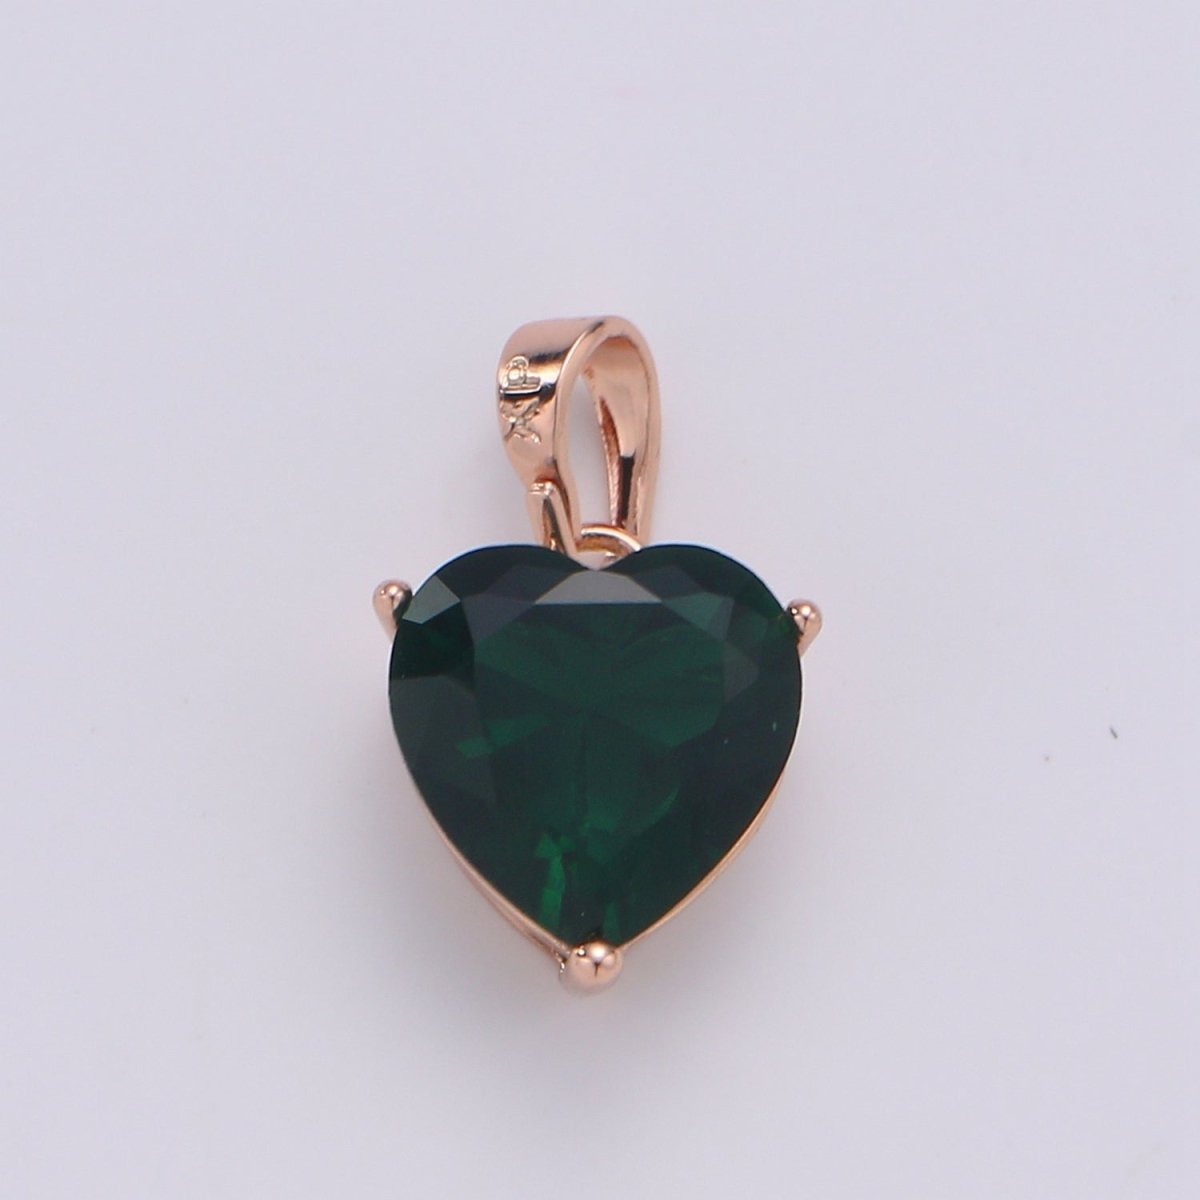 16x8mm Wholesale Cubic Zirconia Green Heart Gem Pendant Charm with 18K Gold-Filled Rose Gold Frame, Pendant for Necklace Bracelet Anklet Making J-167 - DLUXCA